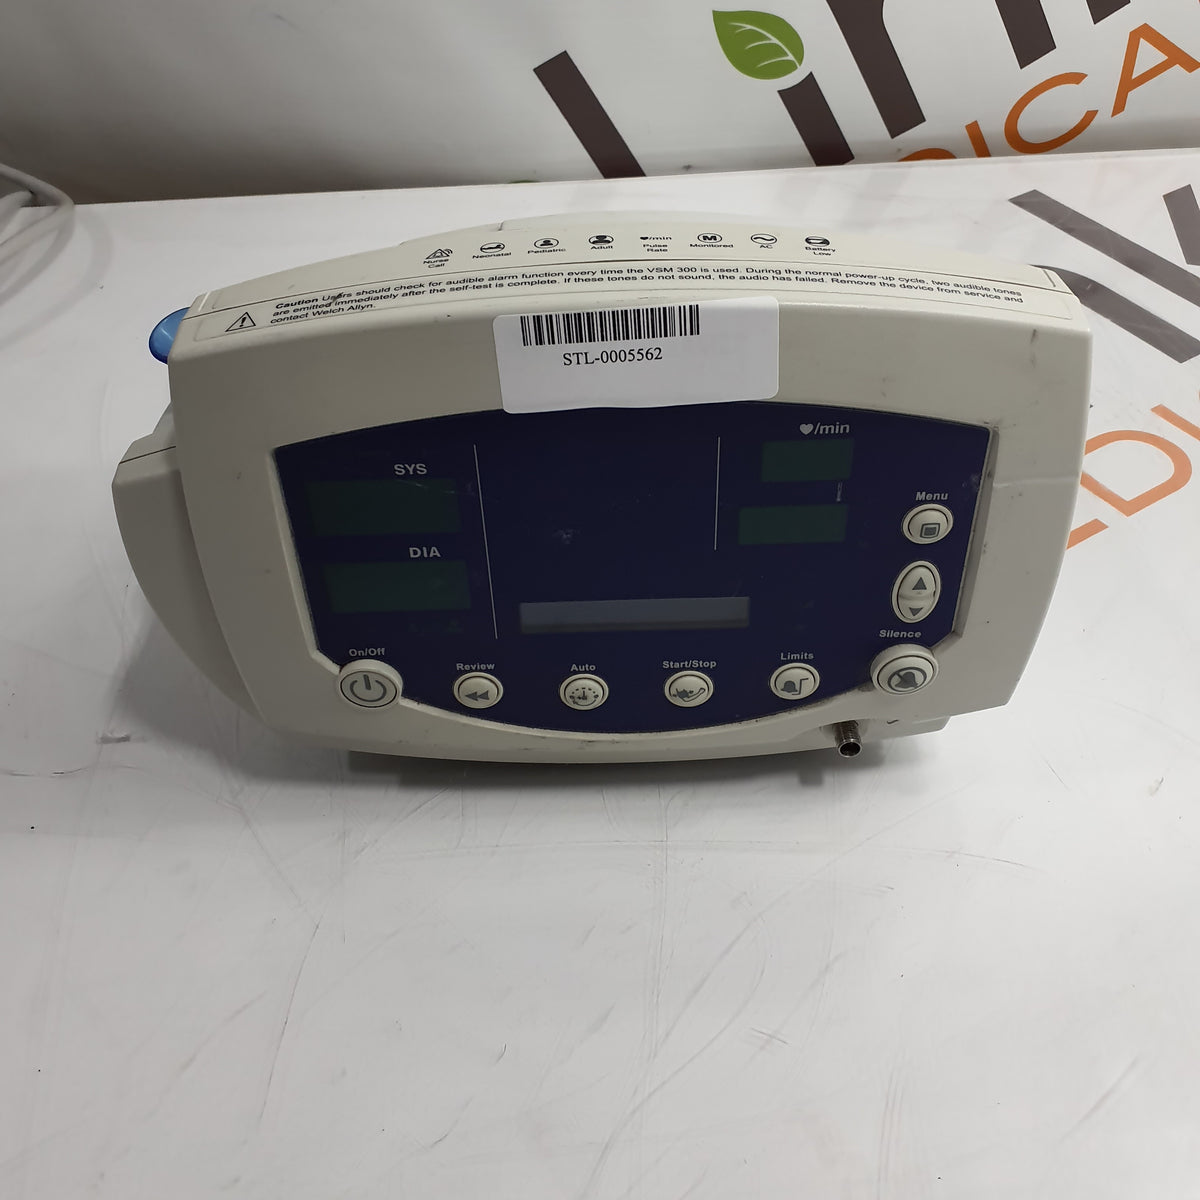 Welch Allyn VSM 300 Vital Signs Monitor for Sale